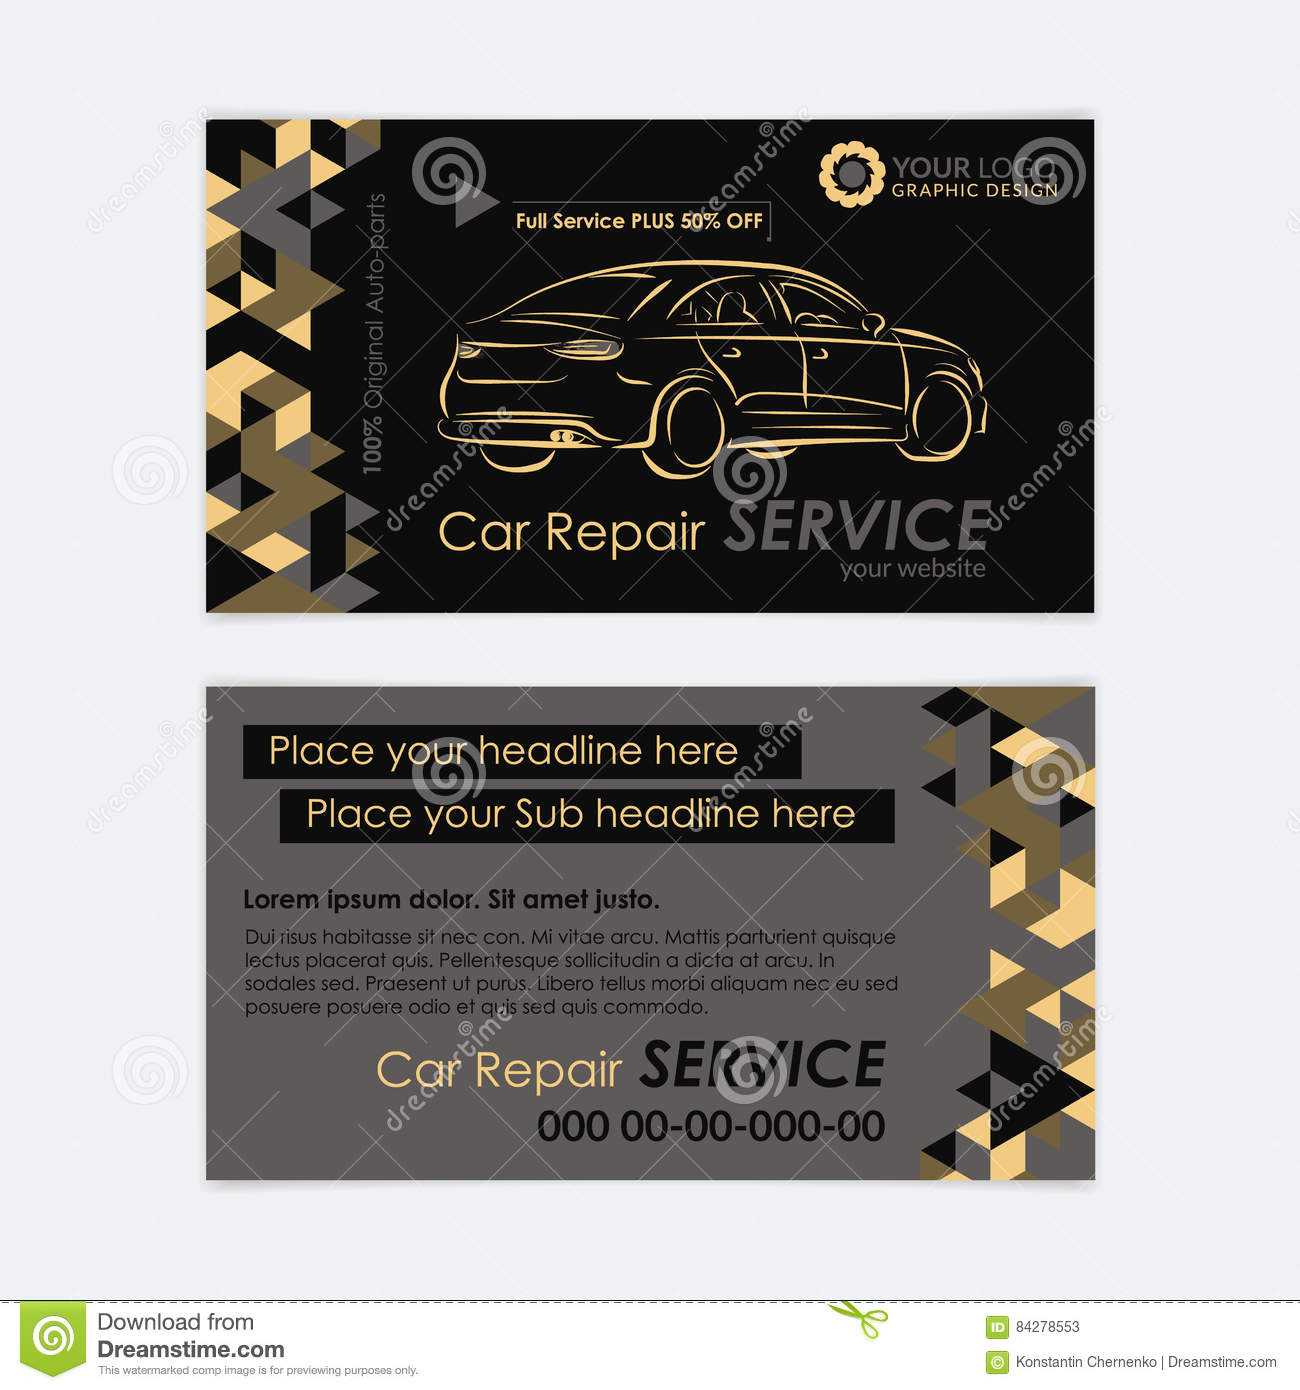 Automotive Service Business Card Template. Car Diagnostics For Transport Business Cards Templates Free